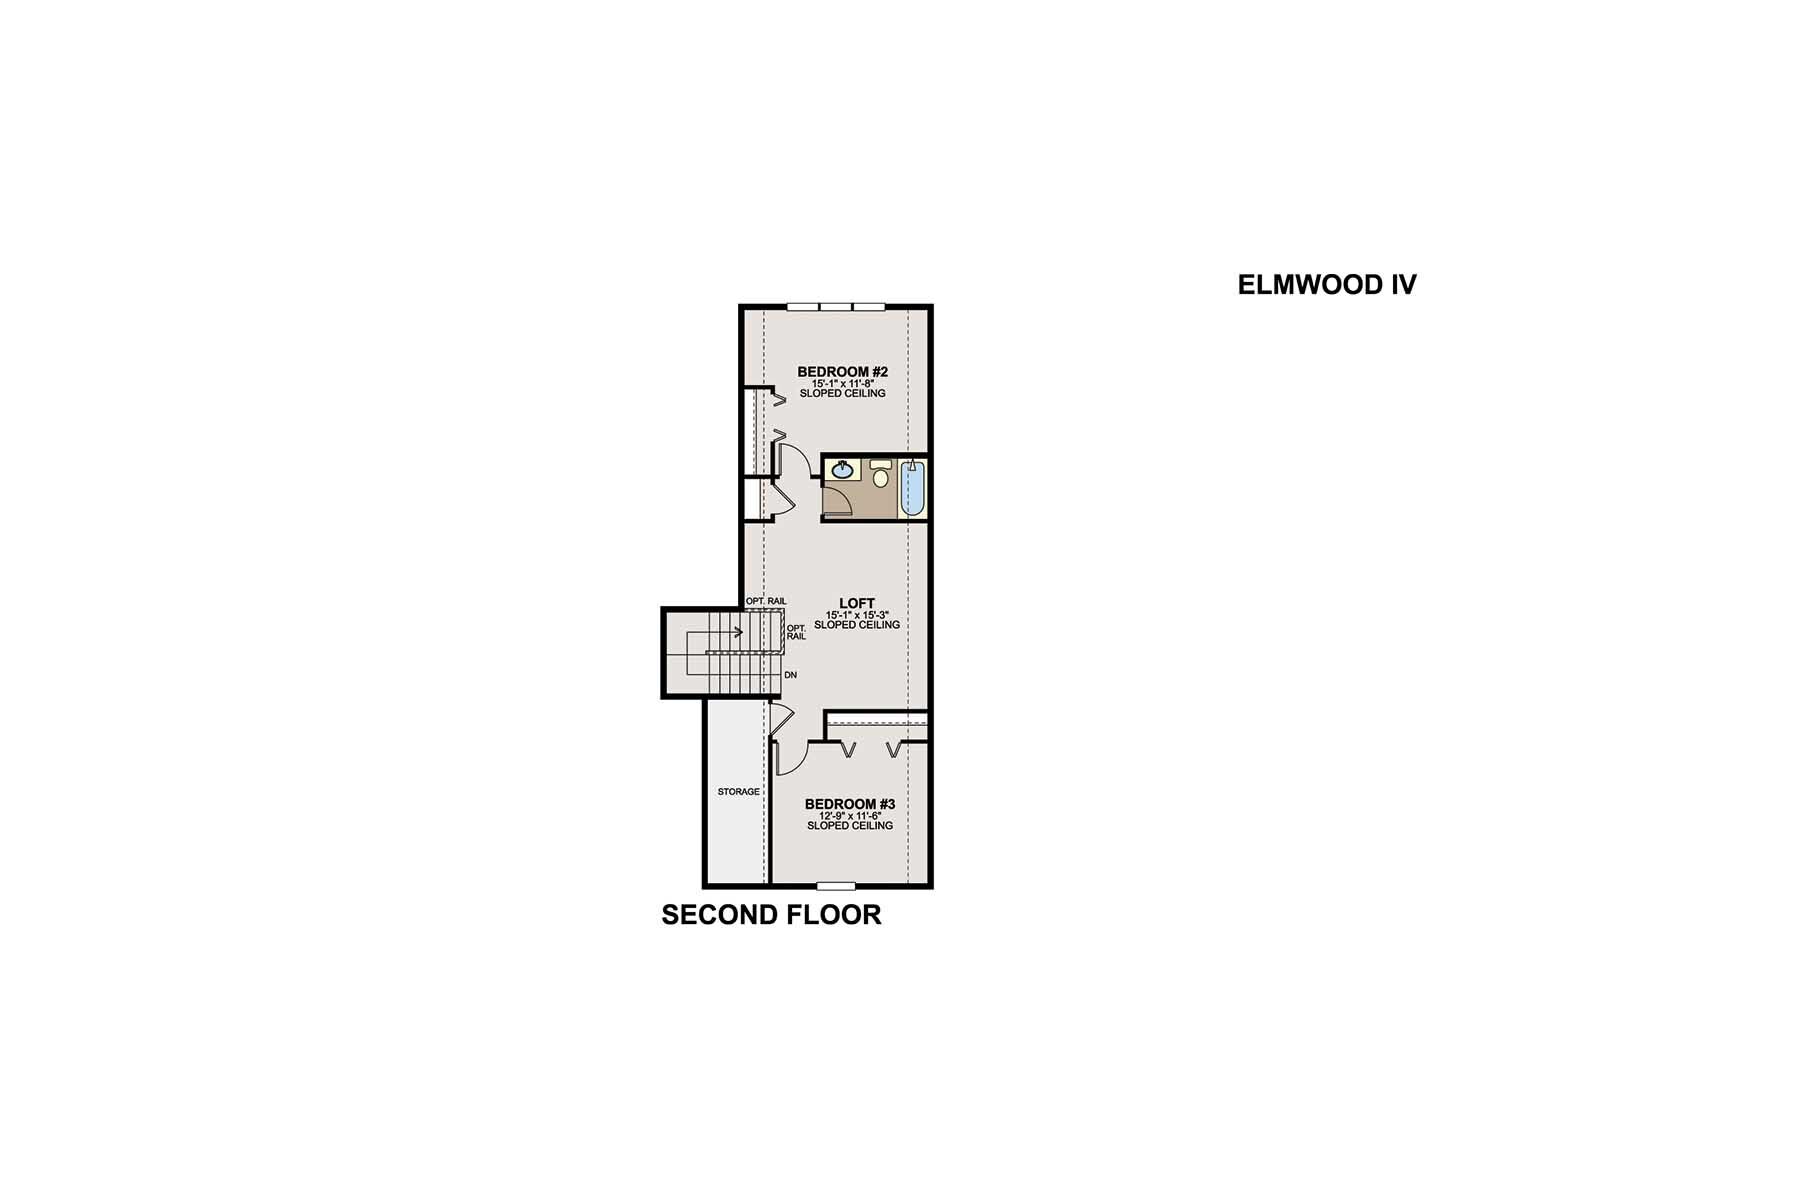 Elmwood IV Second Floor